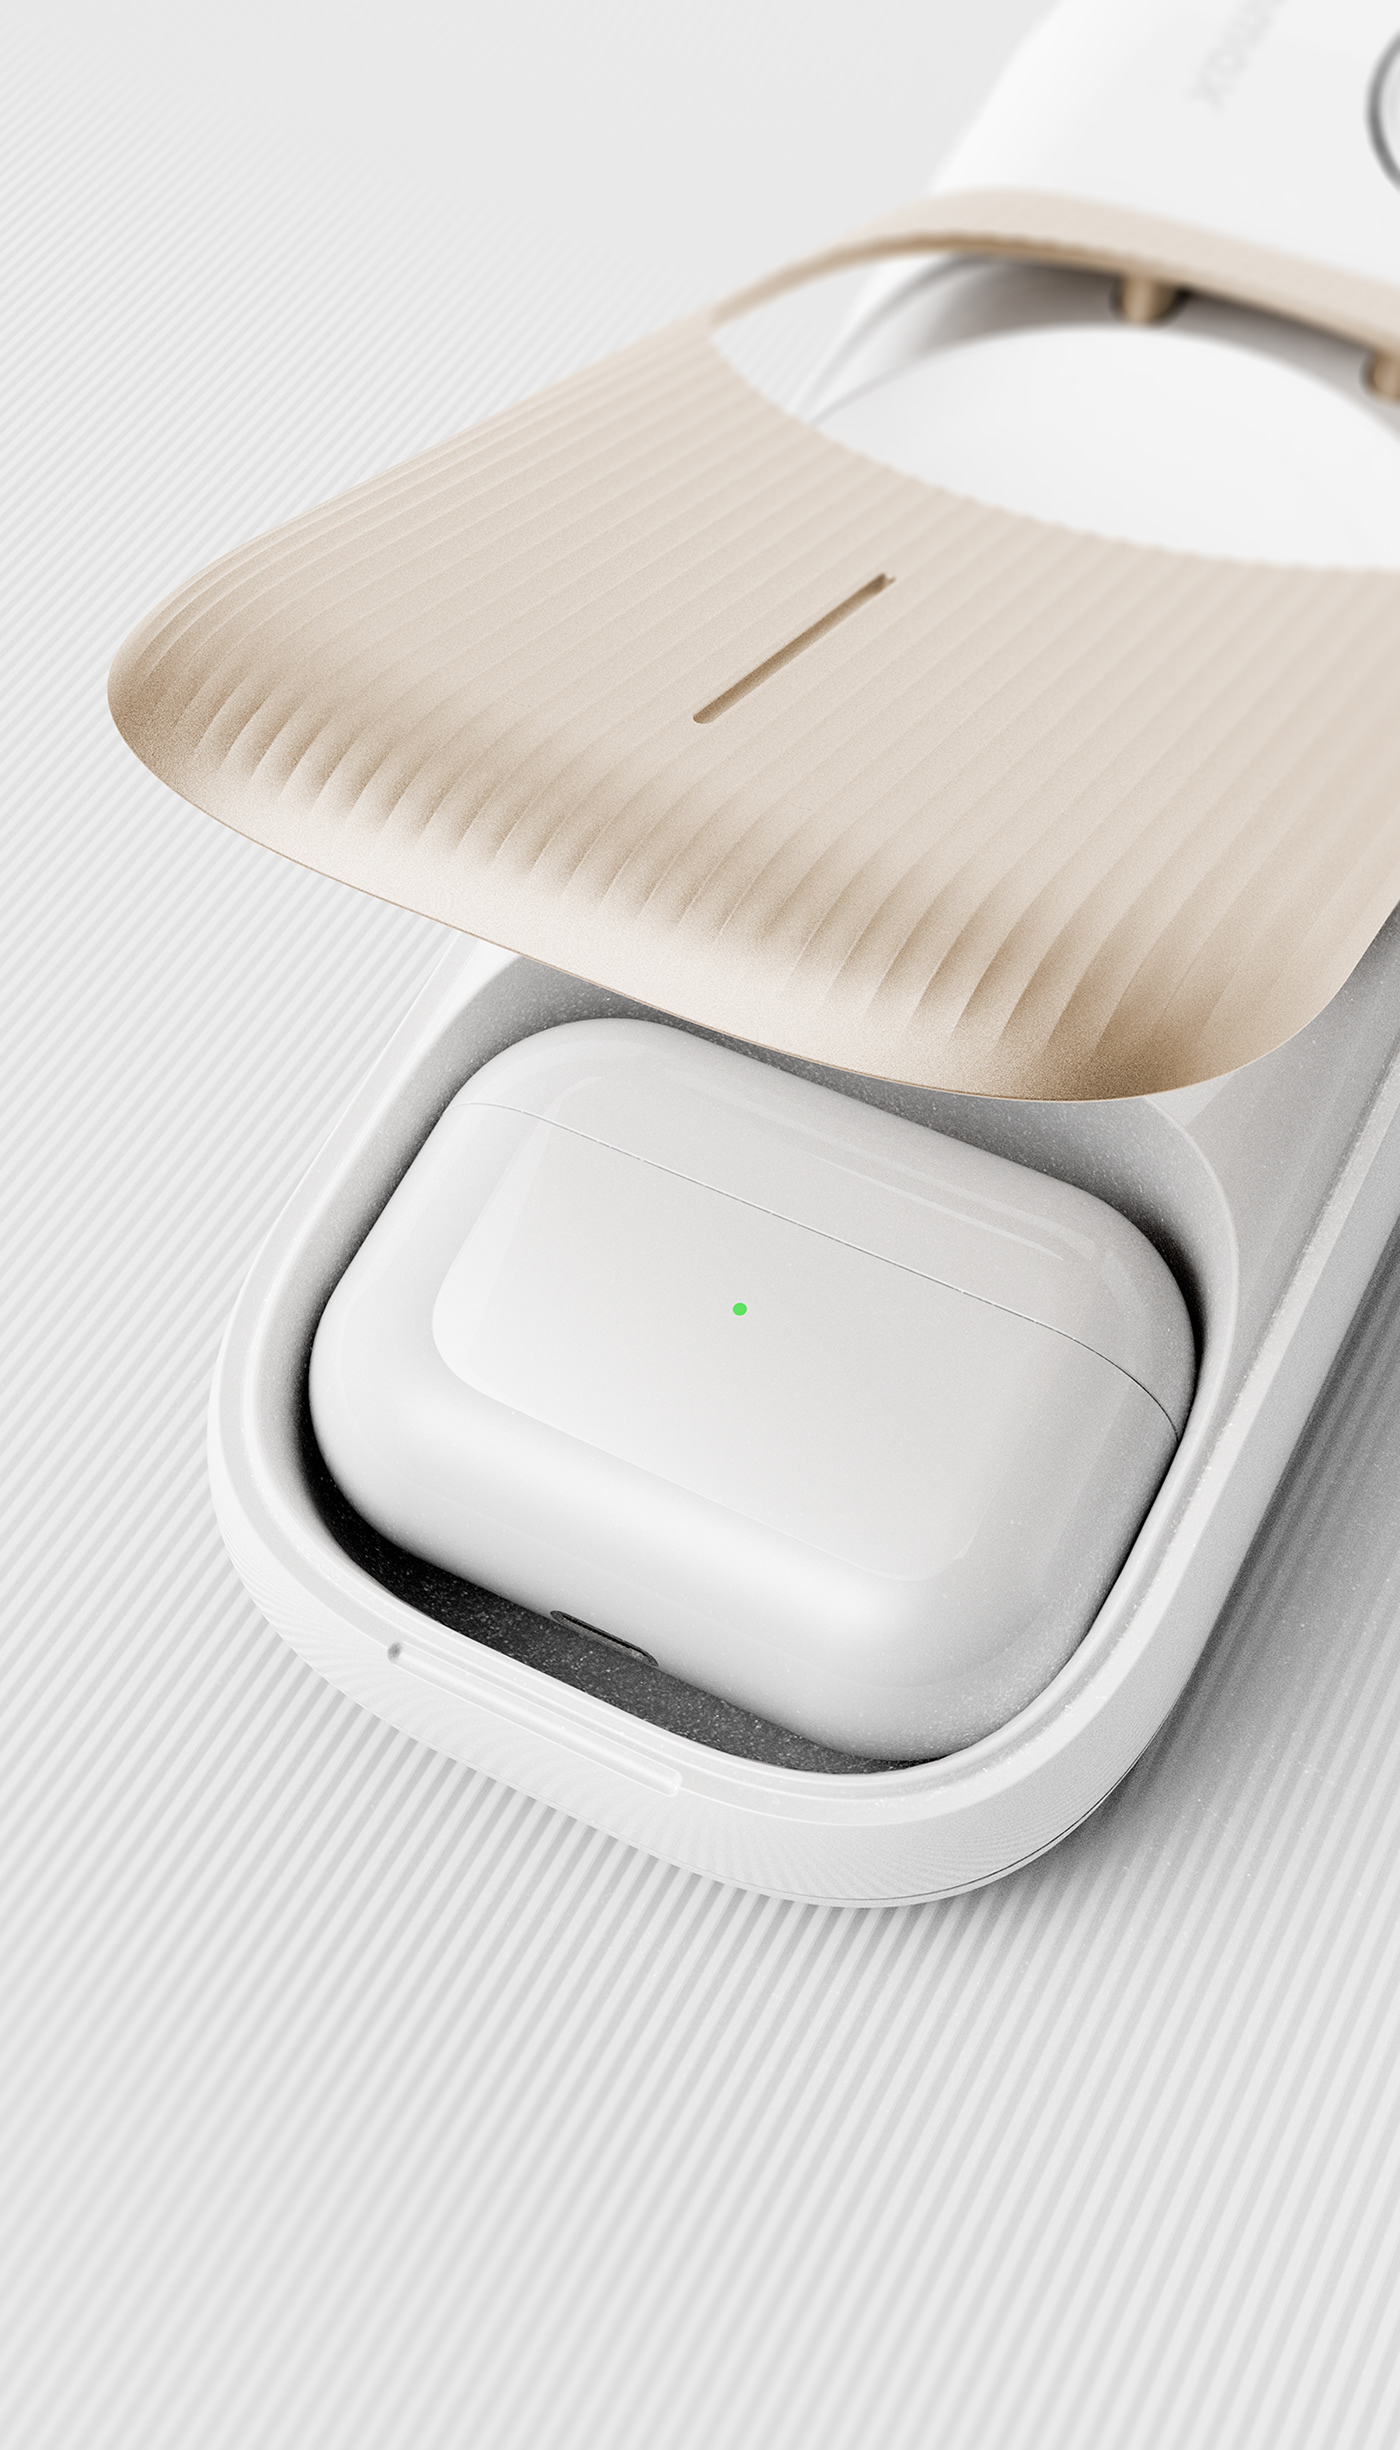 airpods apple charger iphone iwatch MagSafe wireless 产品设计 作品集 工业设计